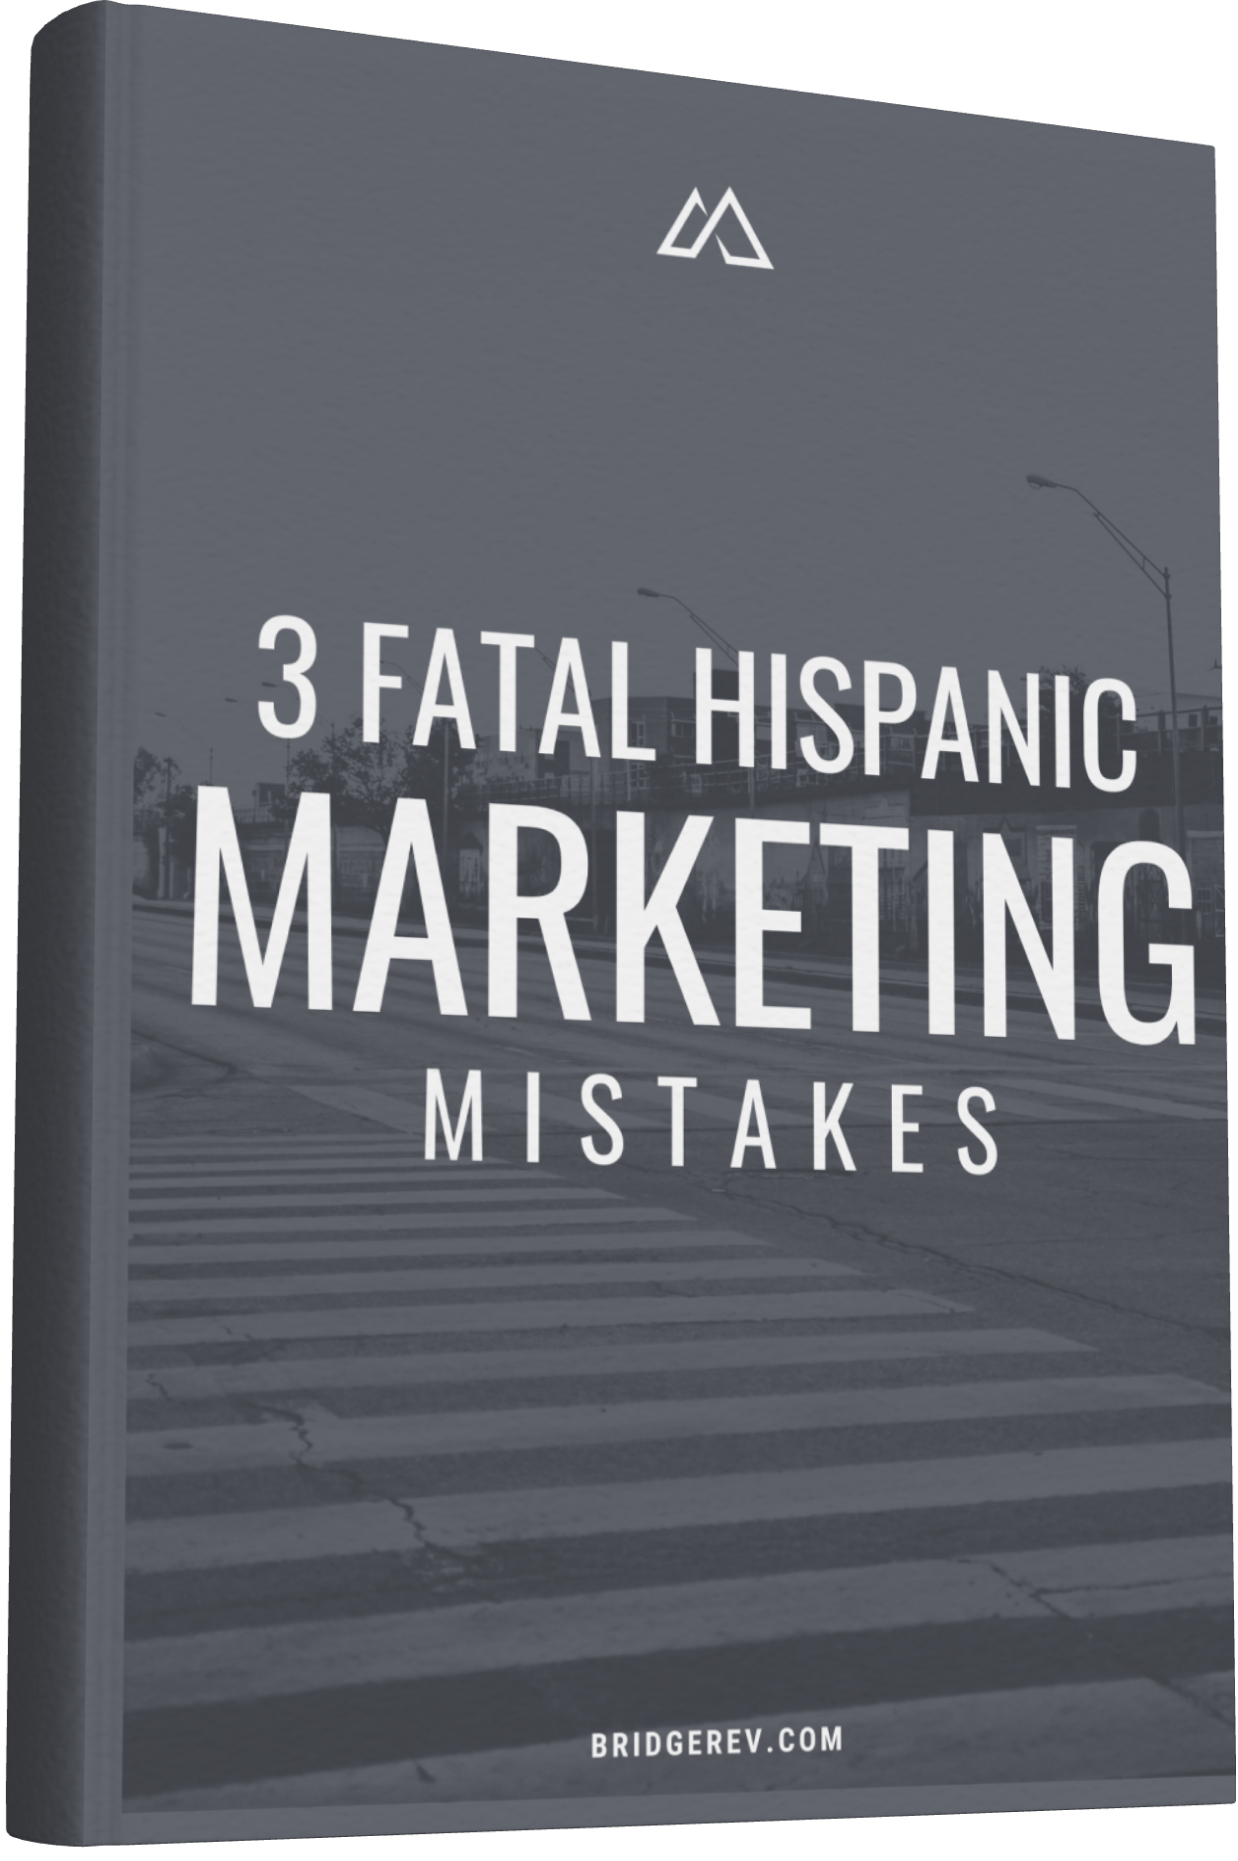 Offer - 3 Fatal Hispanic Marketing Mistakes